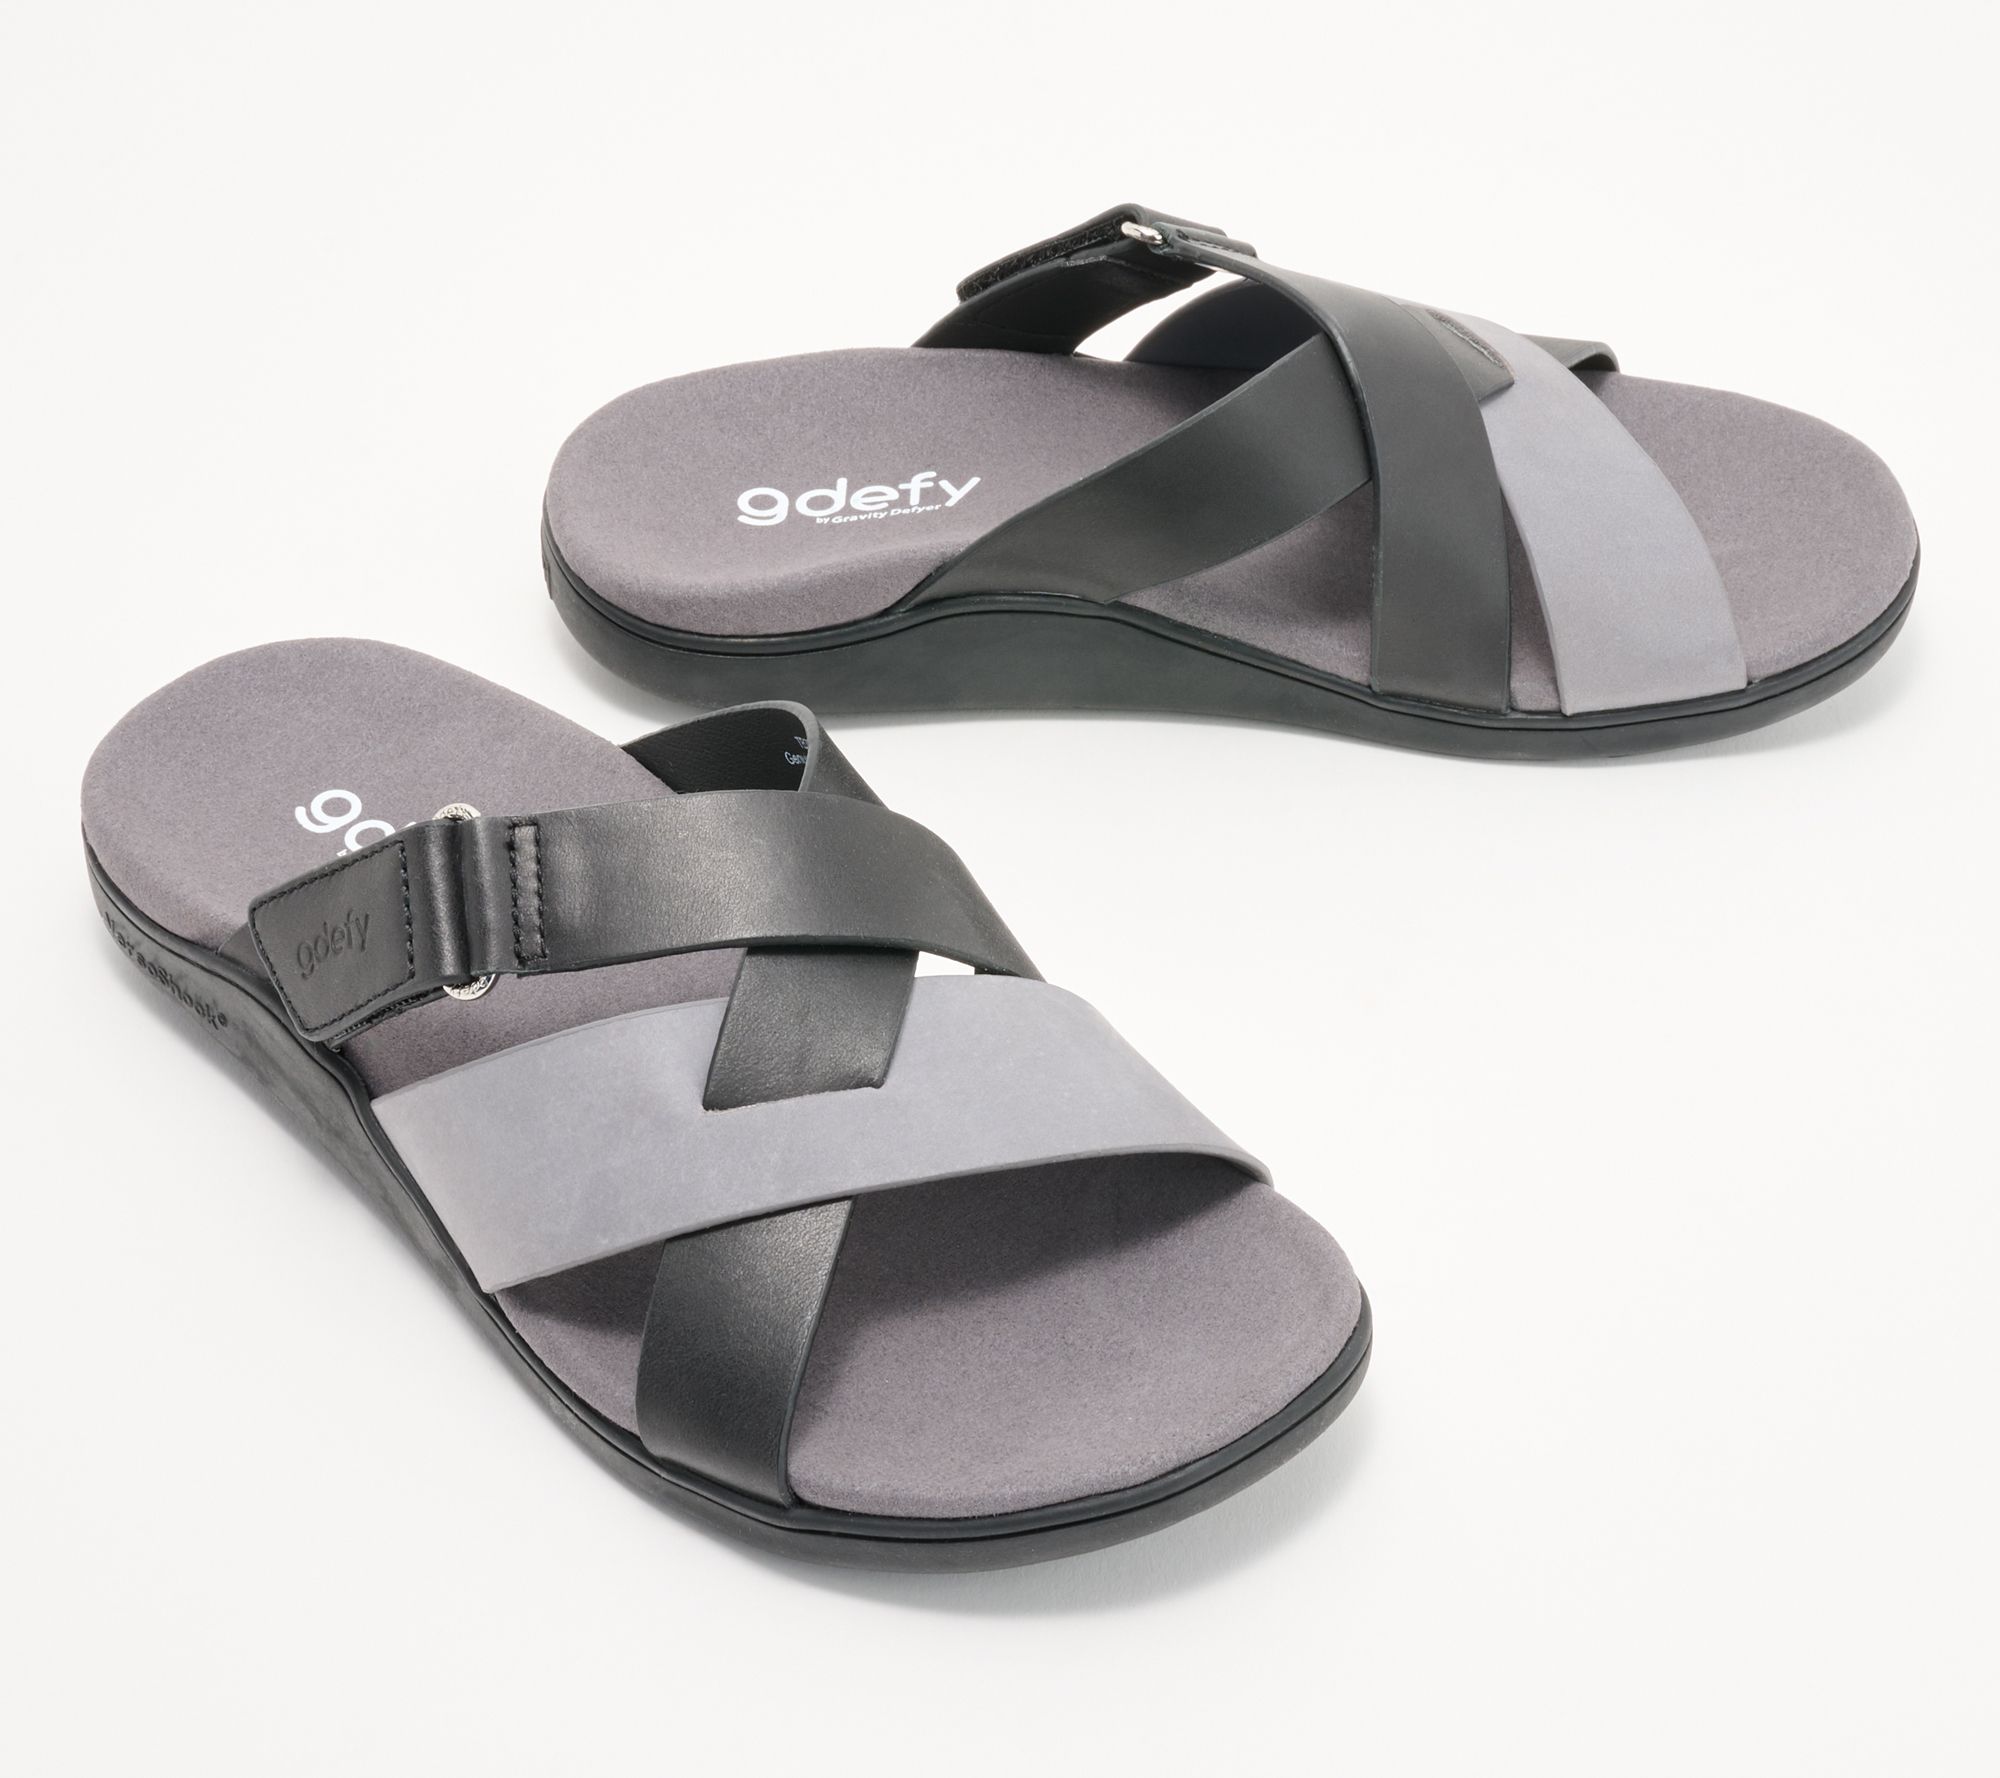 GDEFY VersoShock Orthotic Slide Sandals - Lynor 